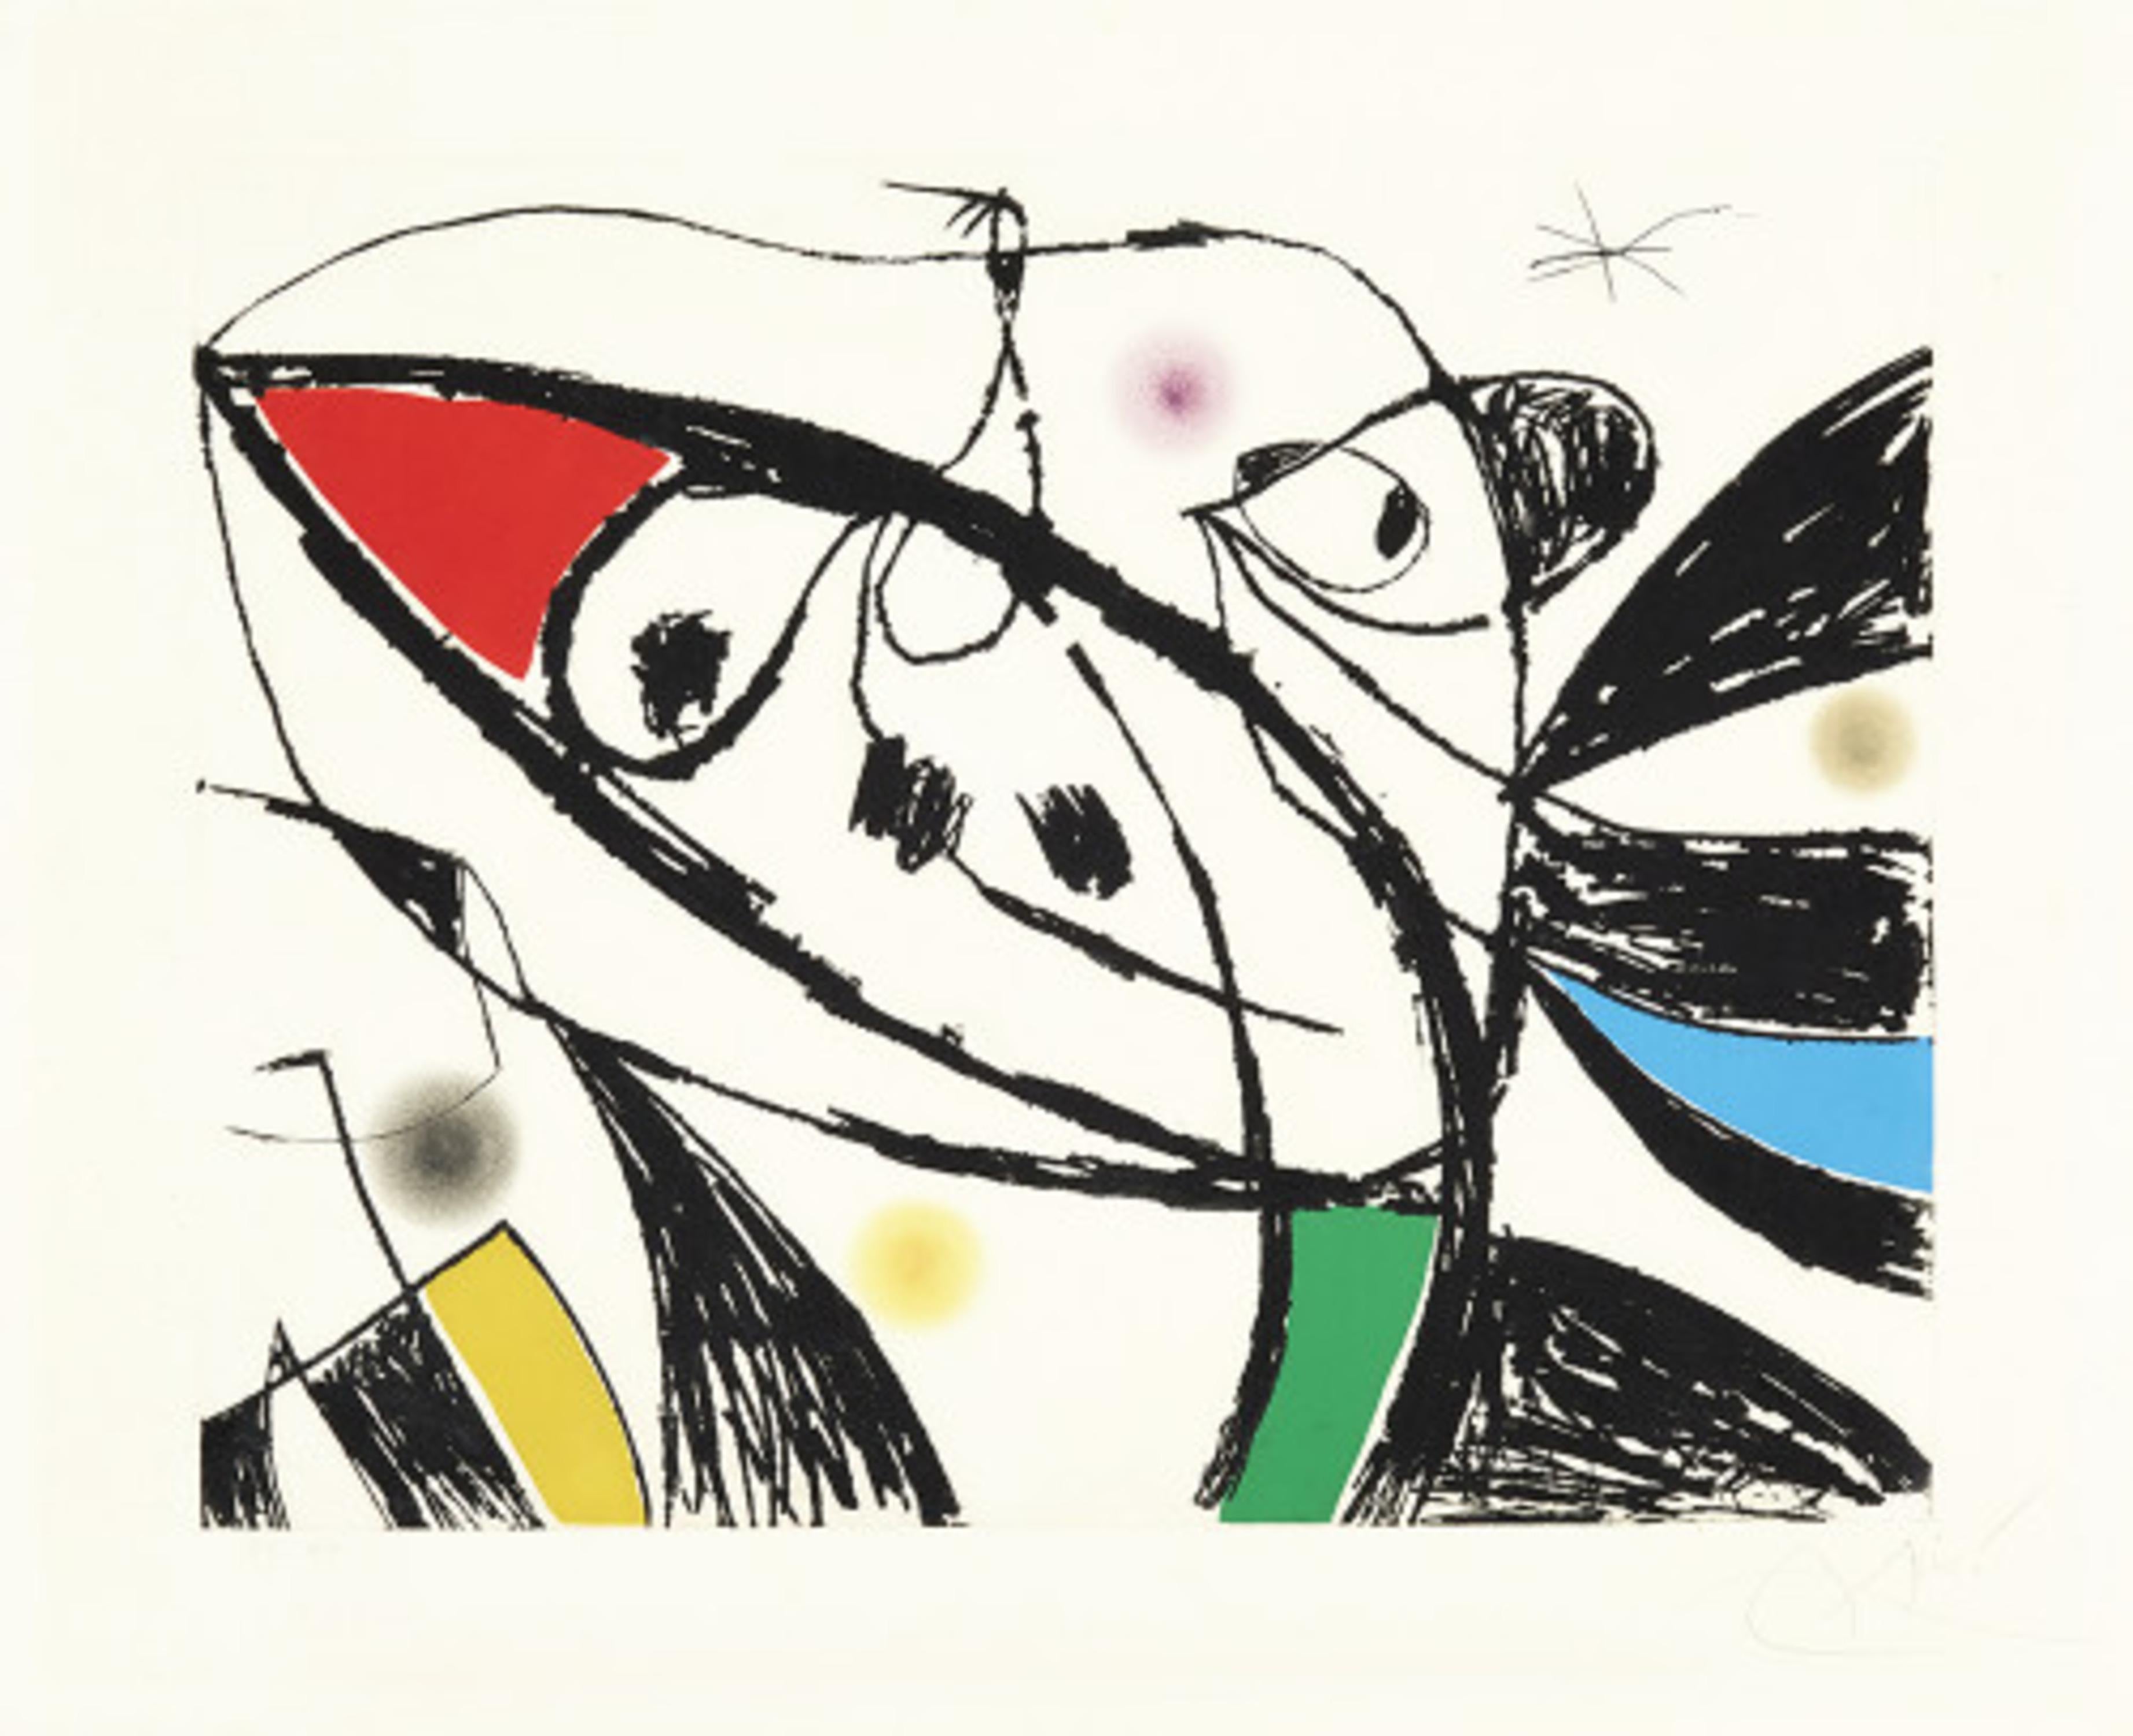 Serie Mallorca III - Print by Joan Miró